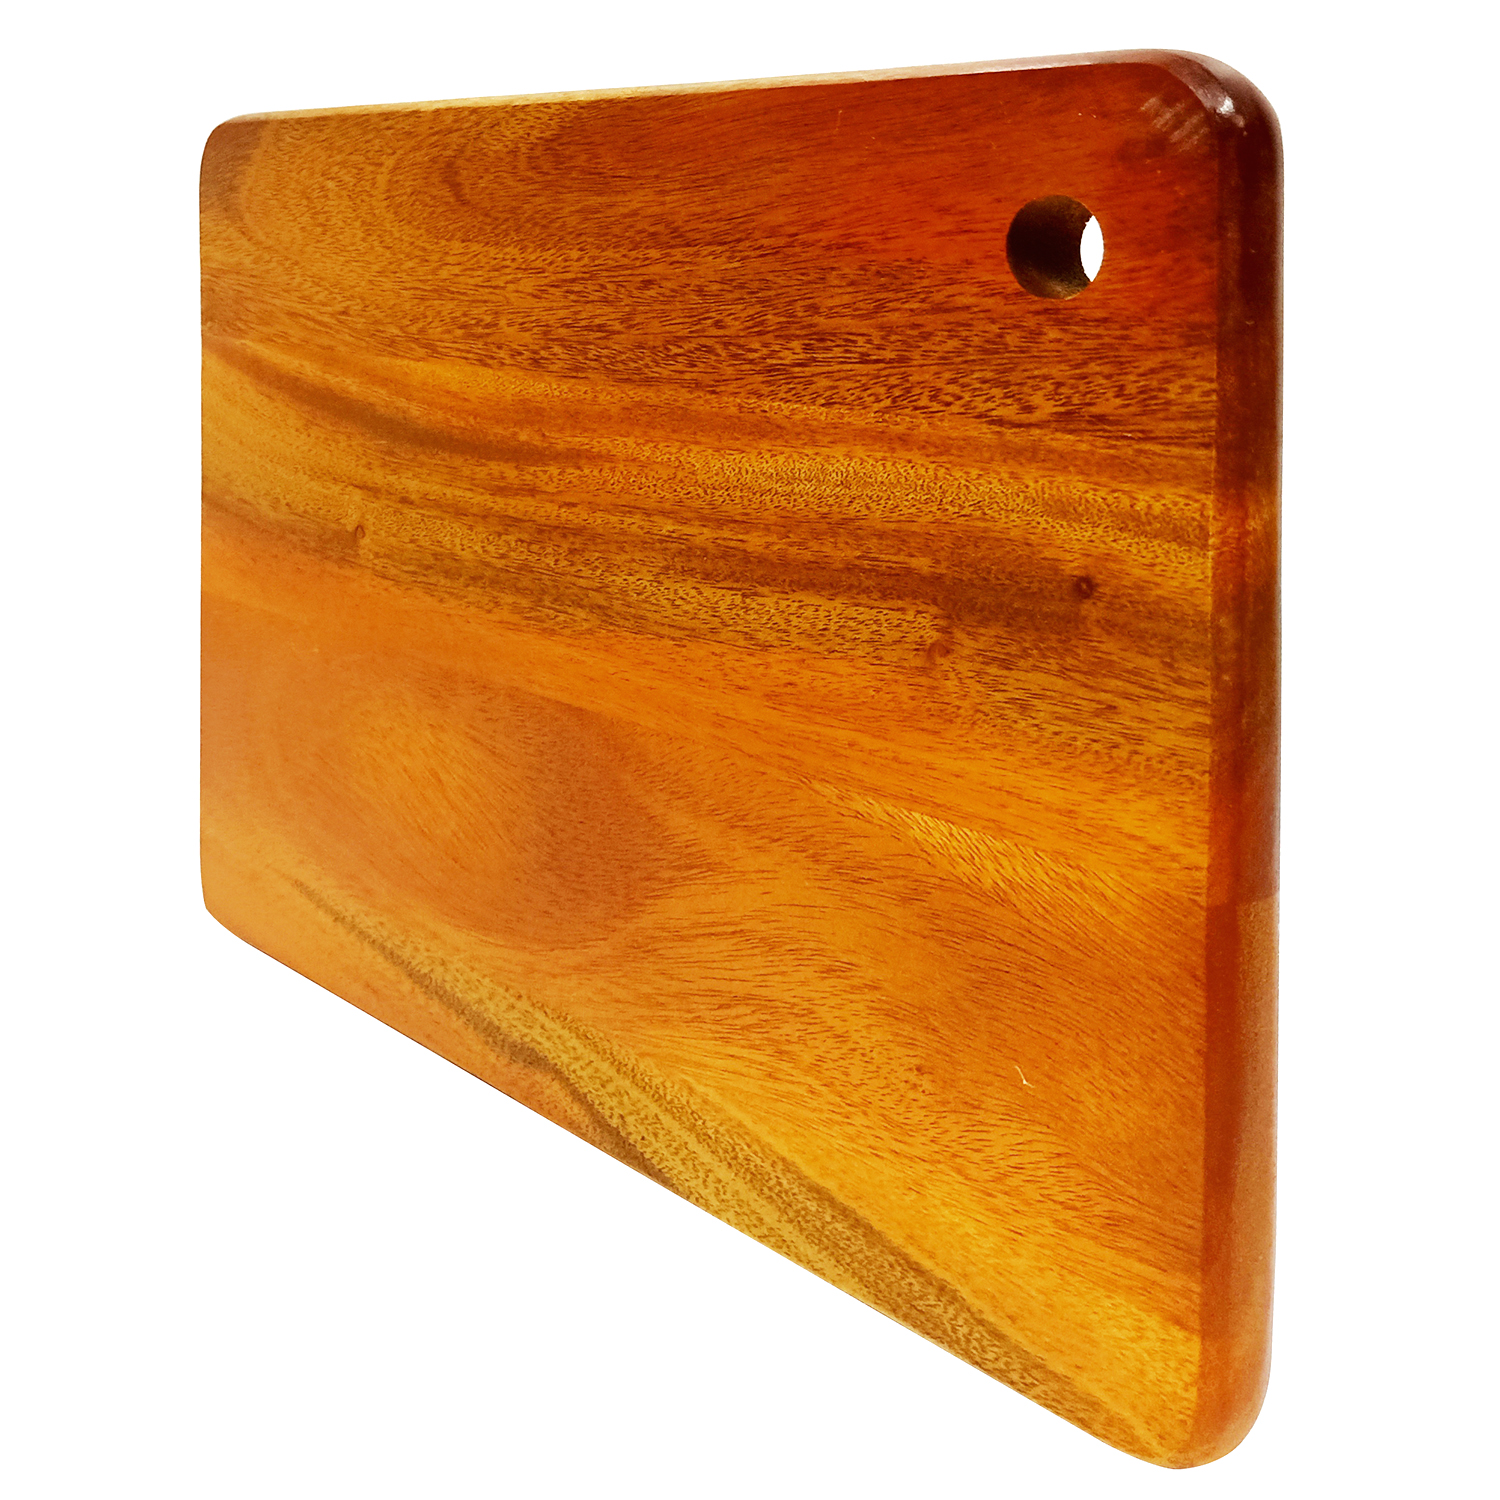 Thớt gỗ xà cừ Duxton DG-TXCG172515 17x25x1.5cm